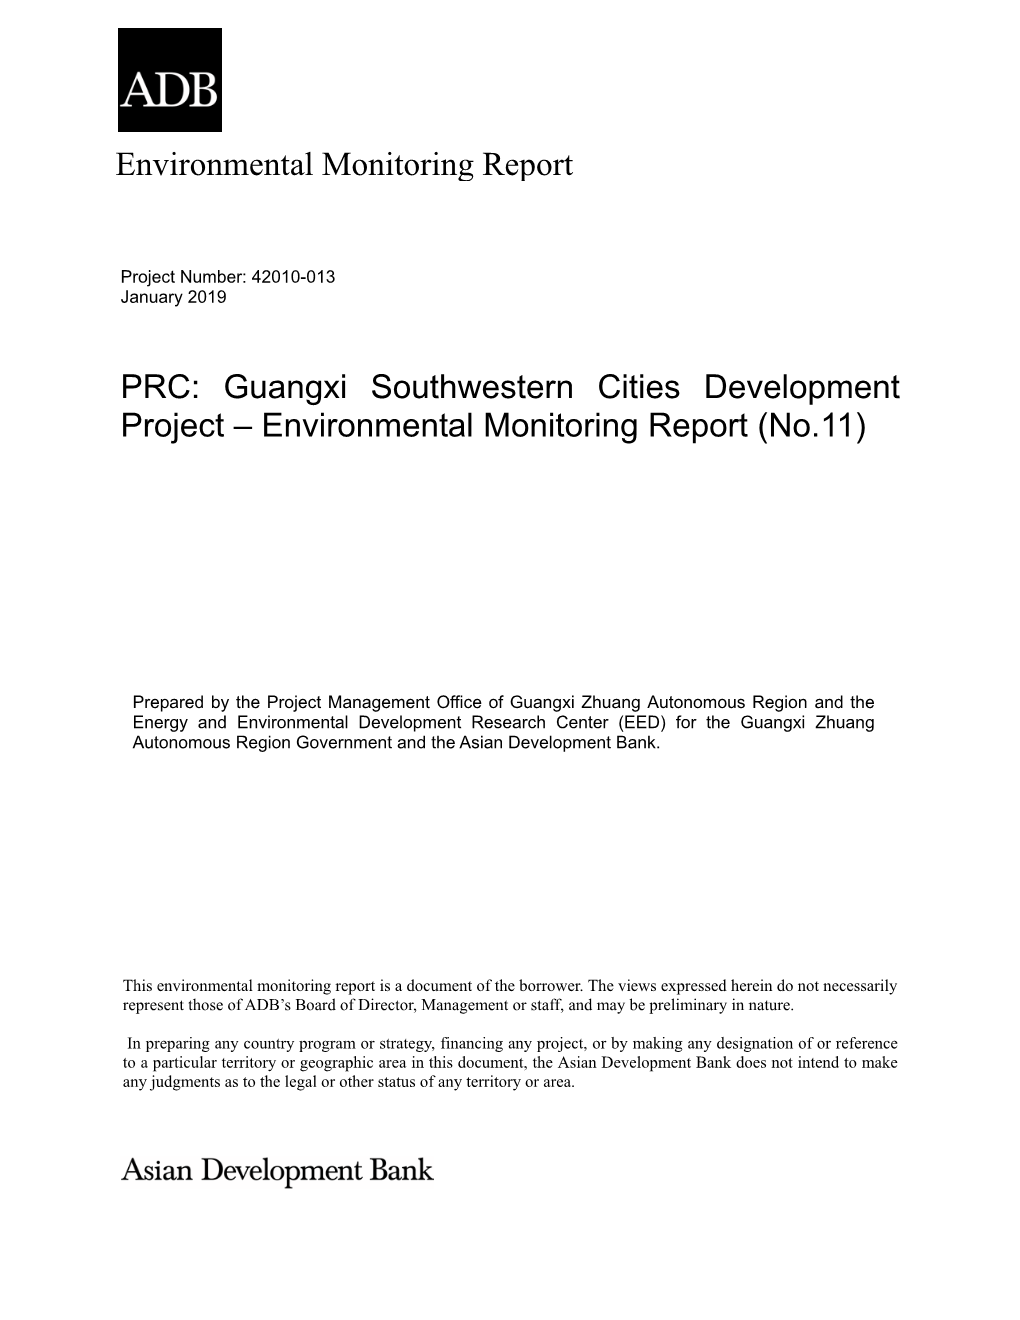 Guangxi Southwestern Cities Development Project: Environmental